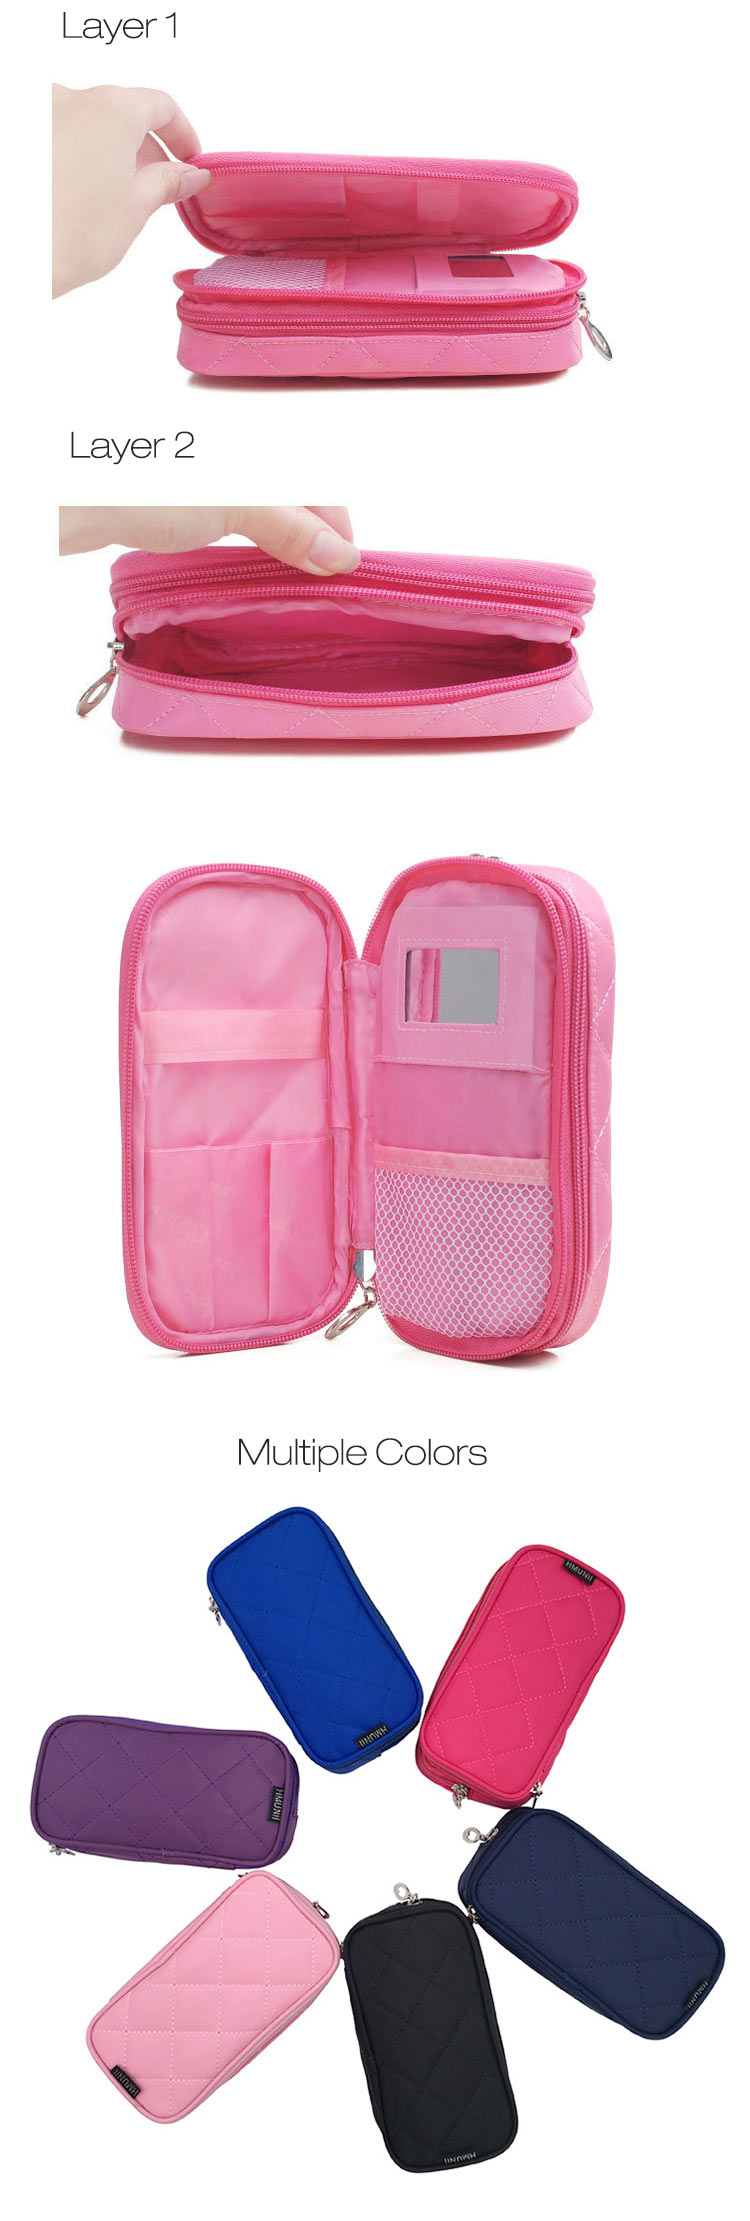 Honana-HN-B56-Portable-2-Layers-Travel-Storage-Bag-Colorful-Cosmetic-Makeup-Organizer-Toiletry-Stora-1163619